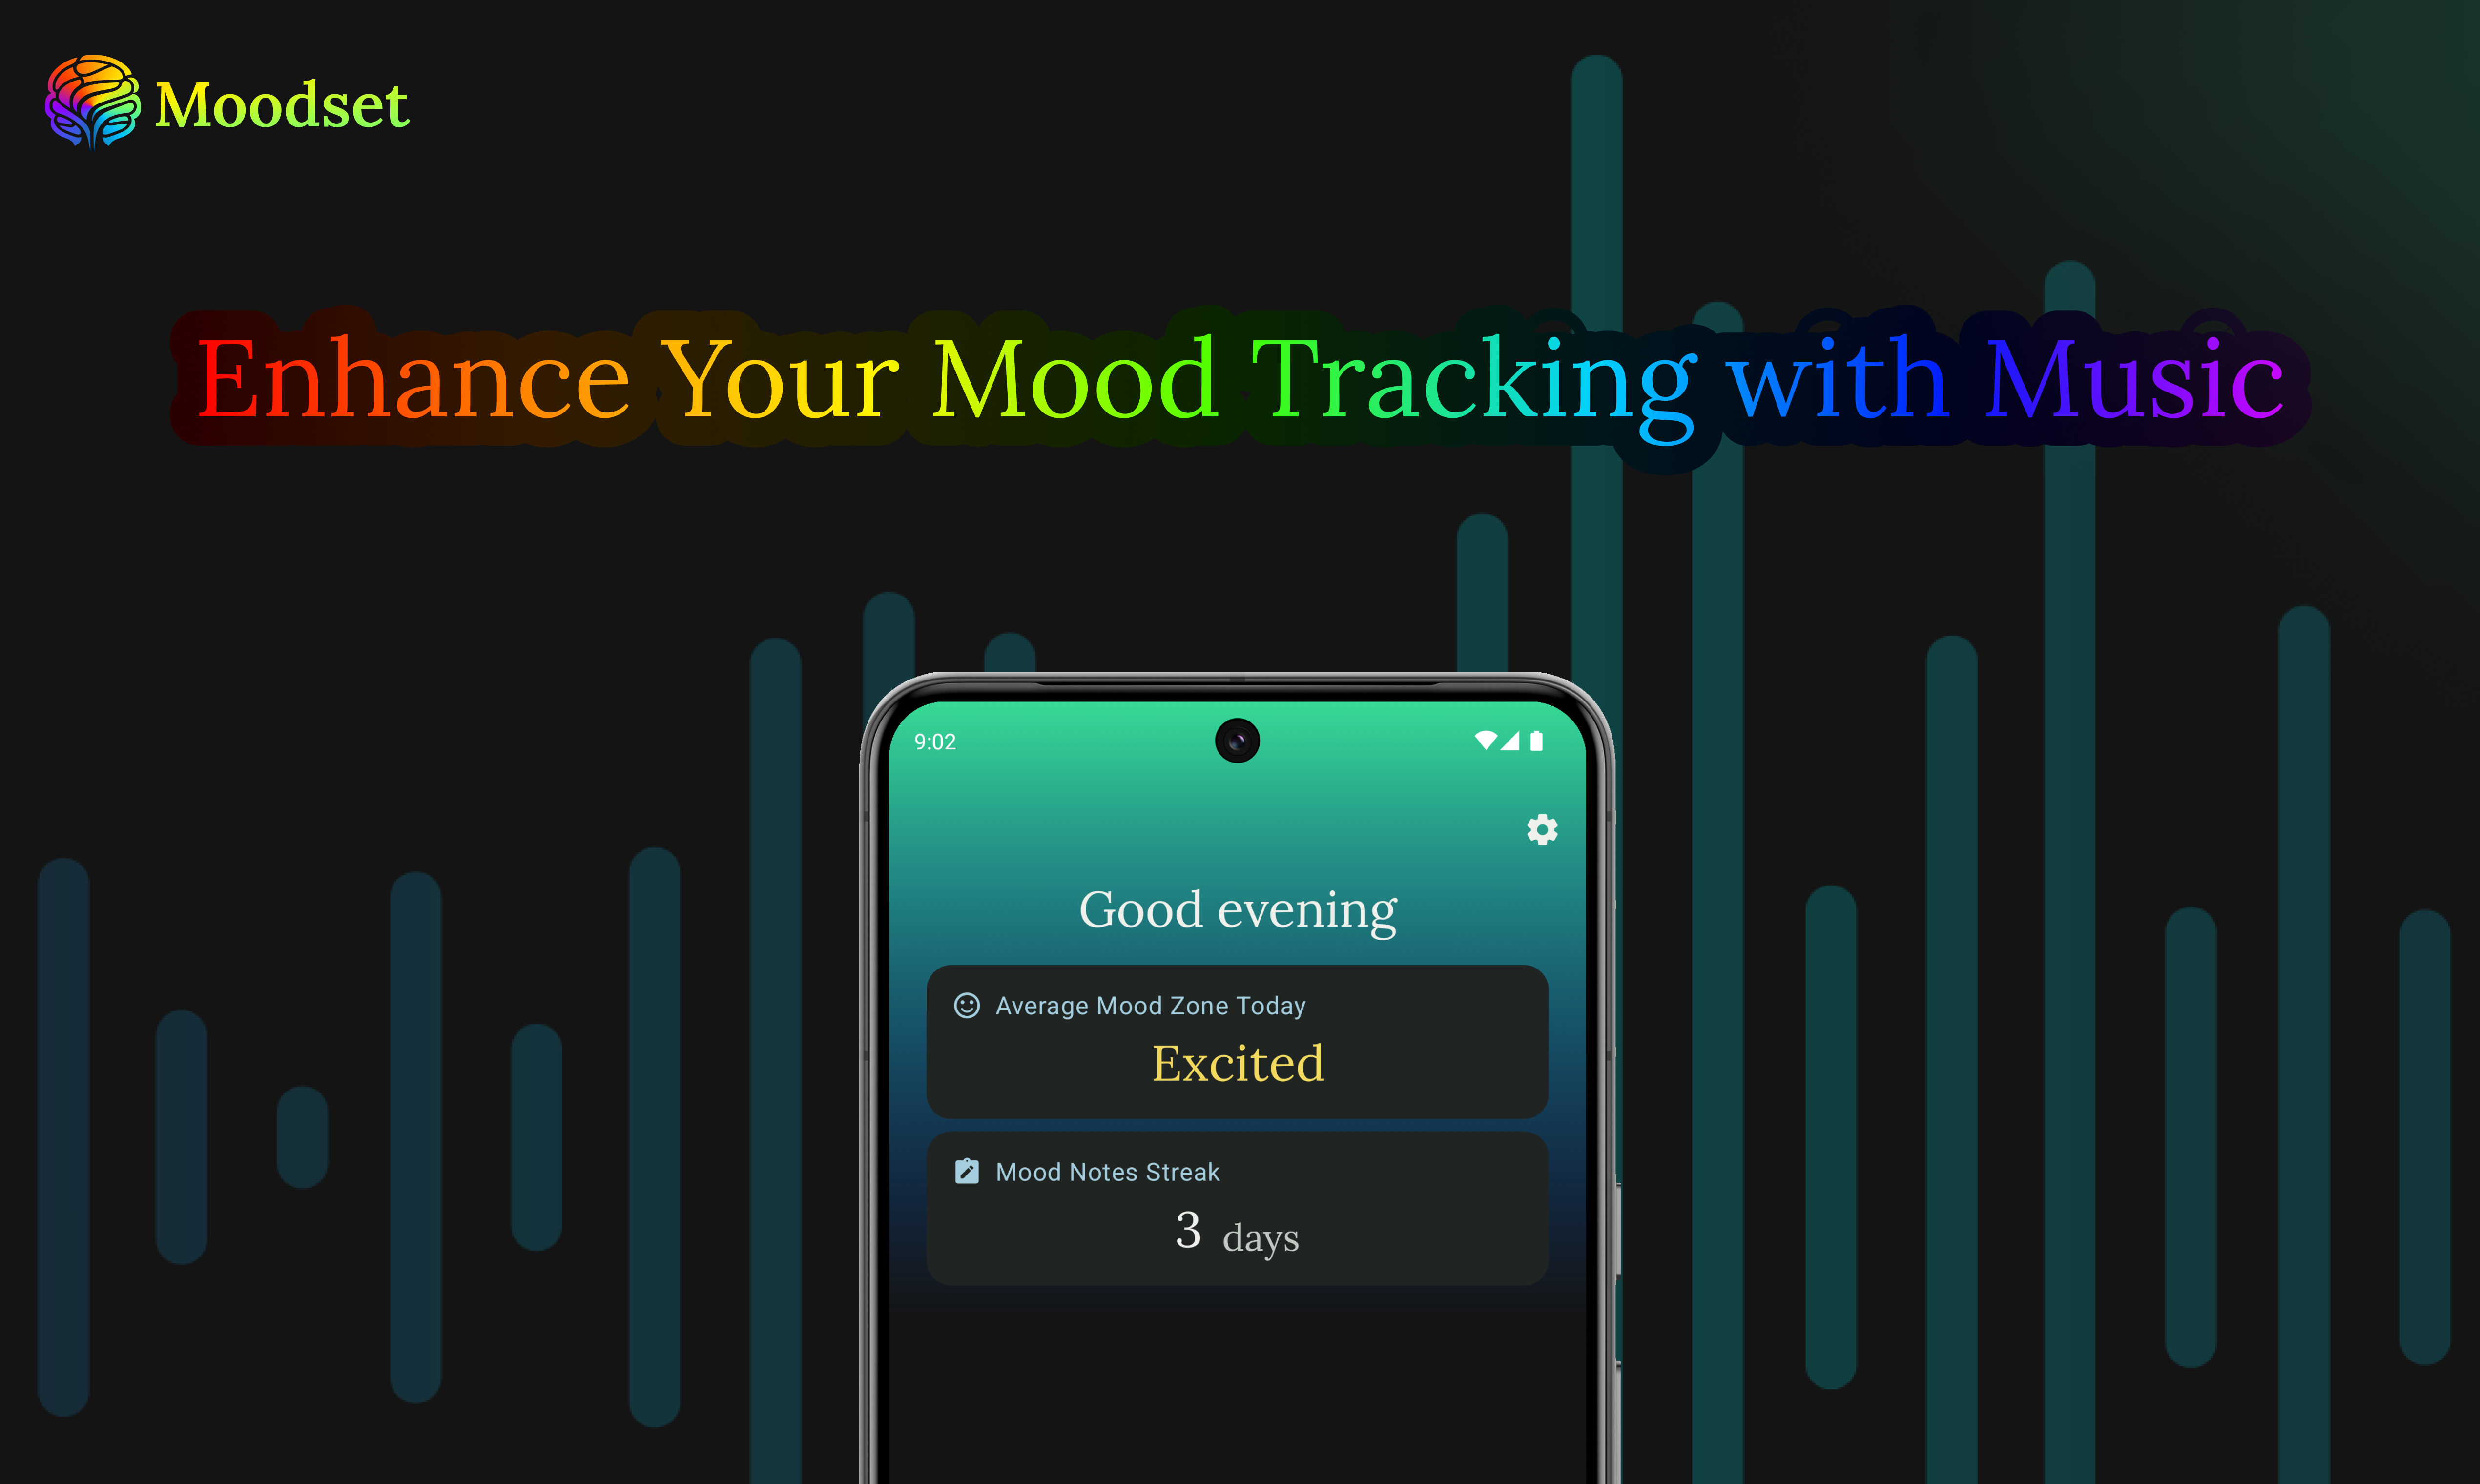 moodset - Mood tracking enhanced by music